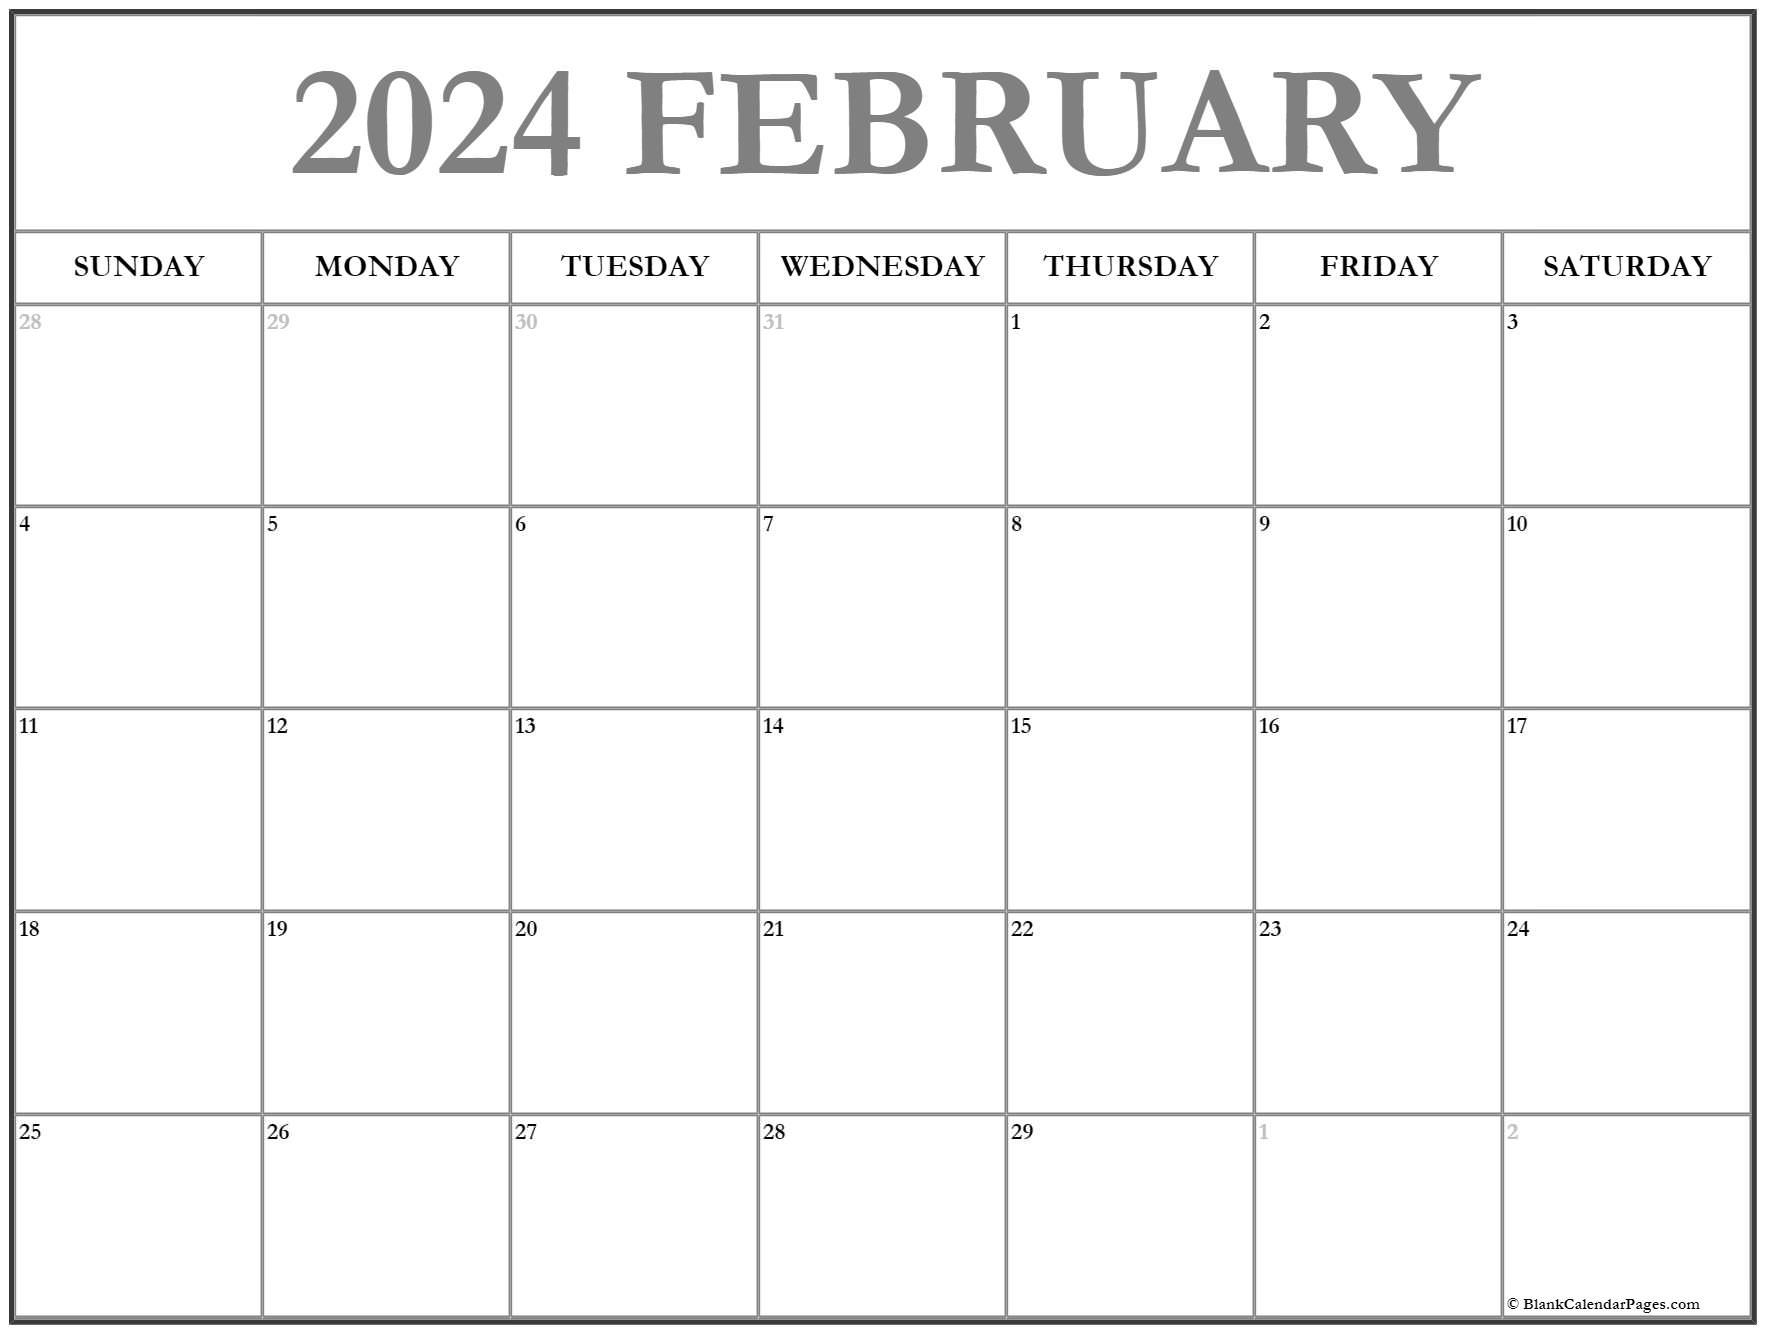 february-2019-calendar-56-templates-of-2019-printable-calendars